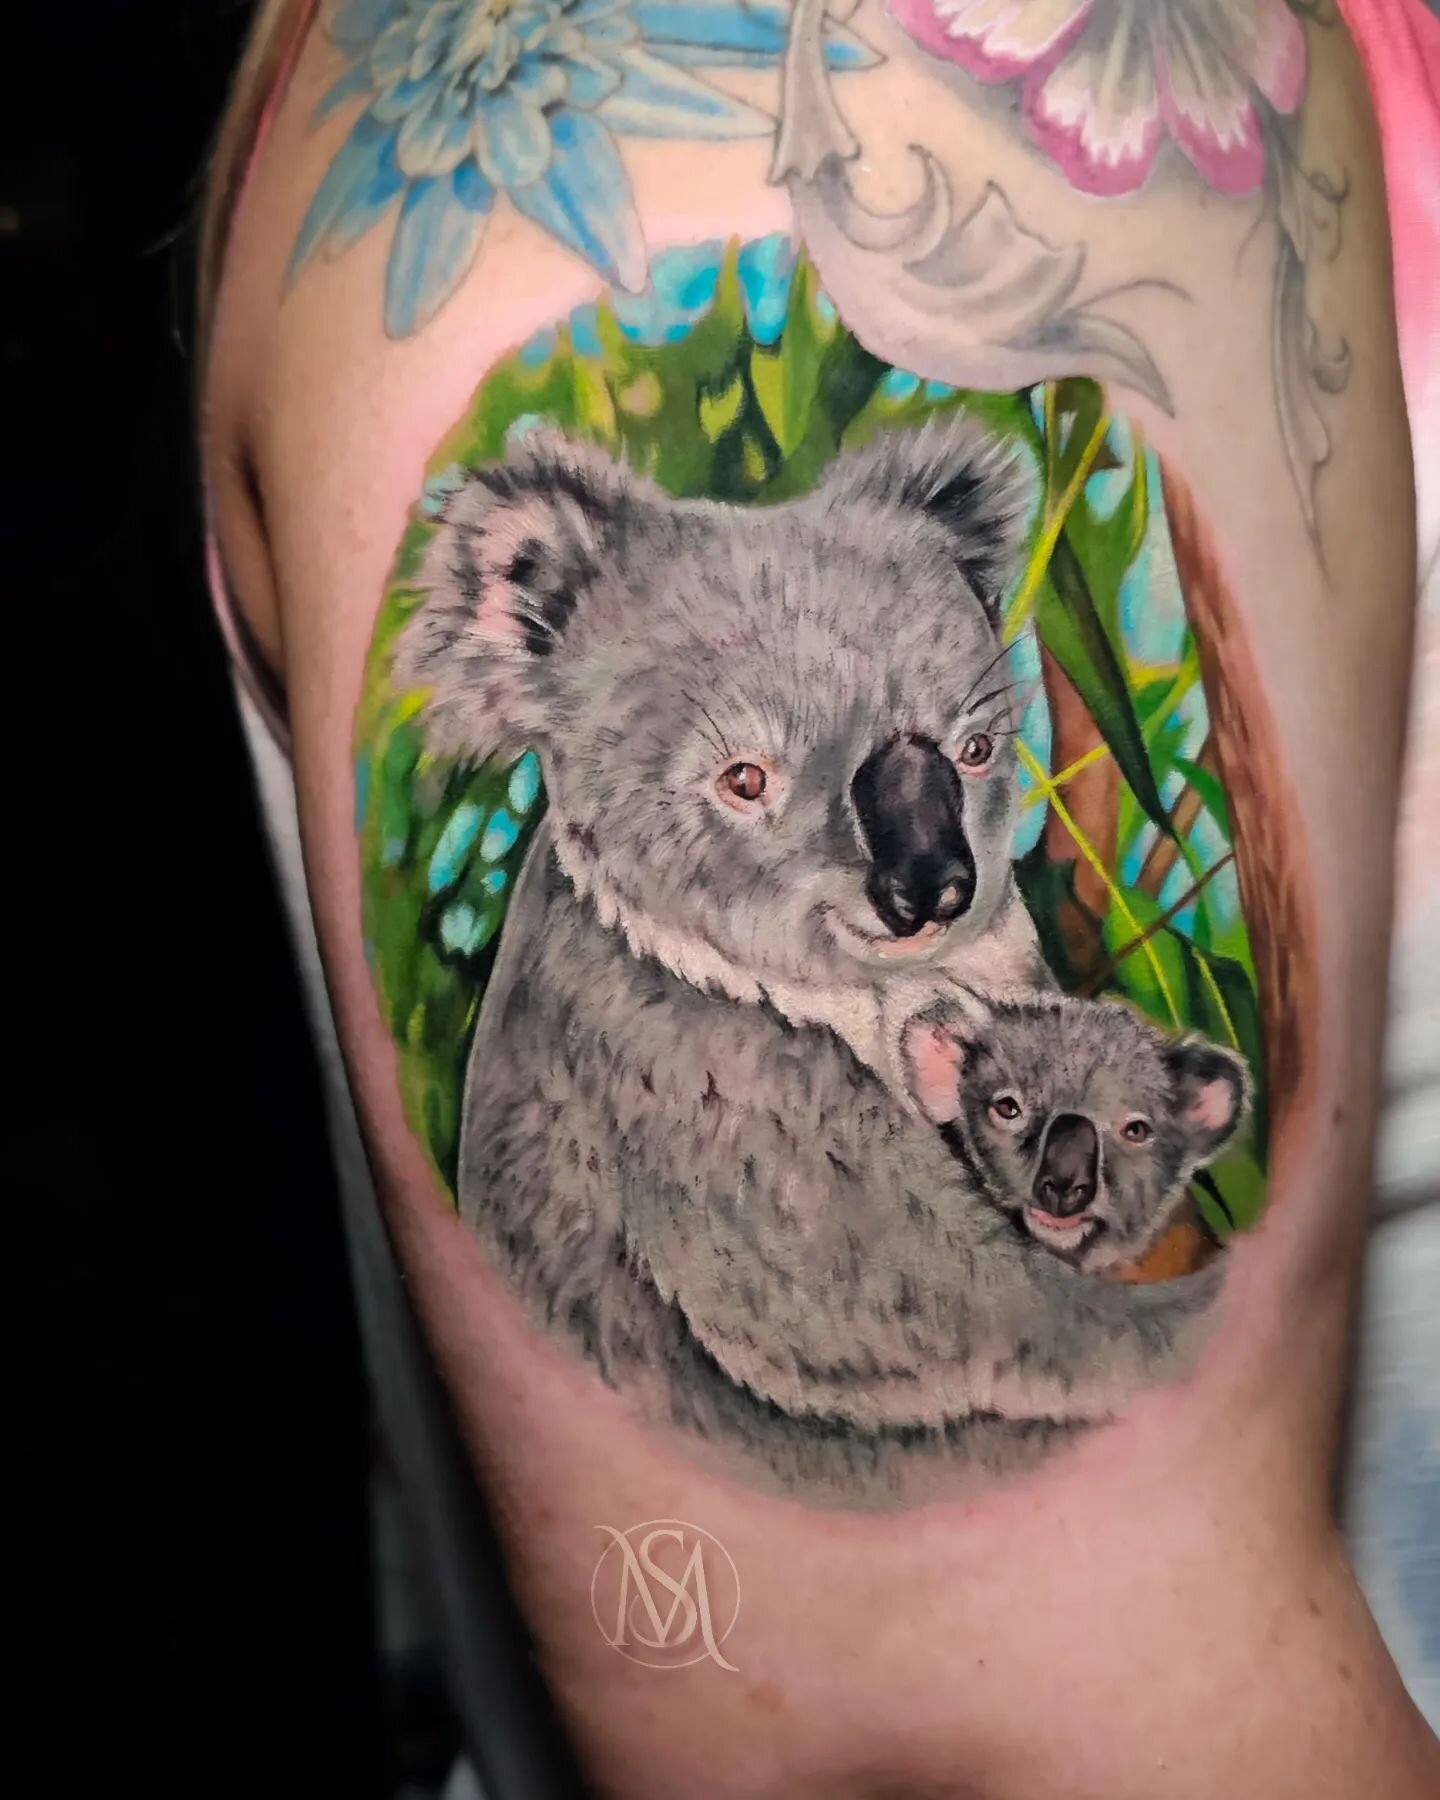 Koala momma and baby by @saramachenart 
.
.
.
#chicolousfinetattoos #gatattoos #gatattooer #atlantatattooer #colortattoo #ladytattooers #ladytattooer #womanartist #womanownedbusiness #tattoolife #tattooartists #tattoolover #athensga #uga #georgia #mo